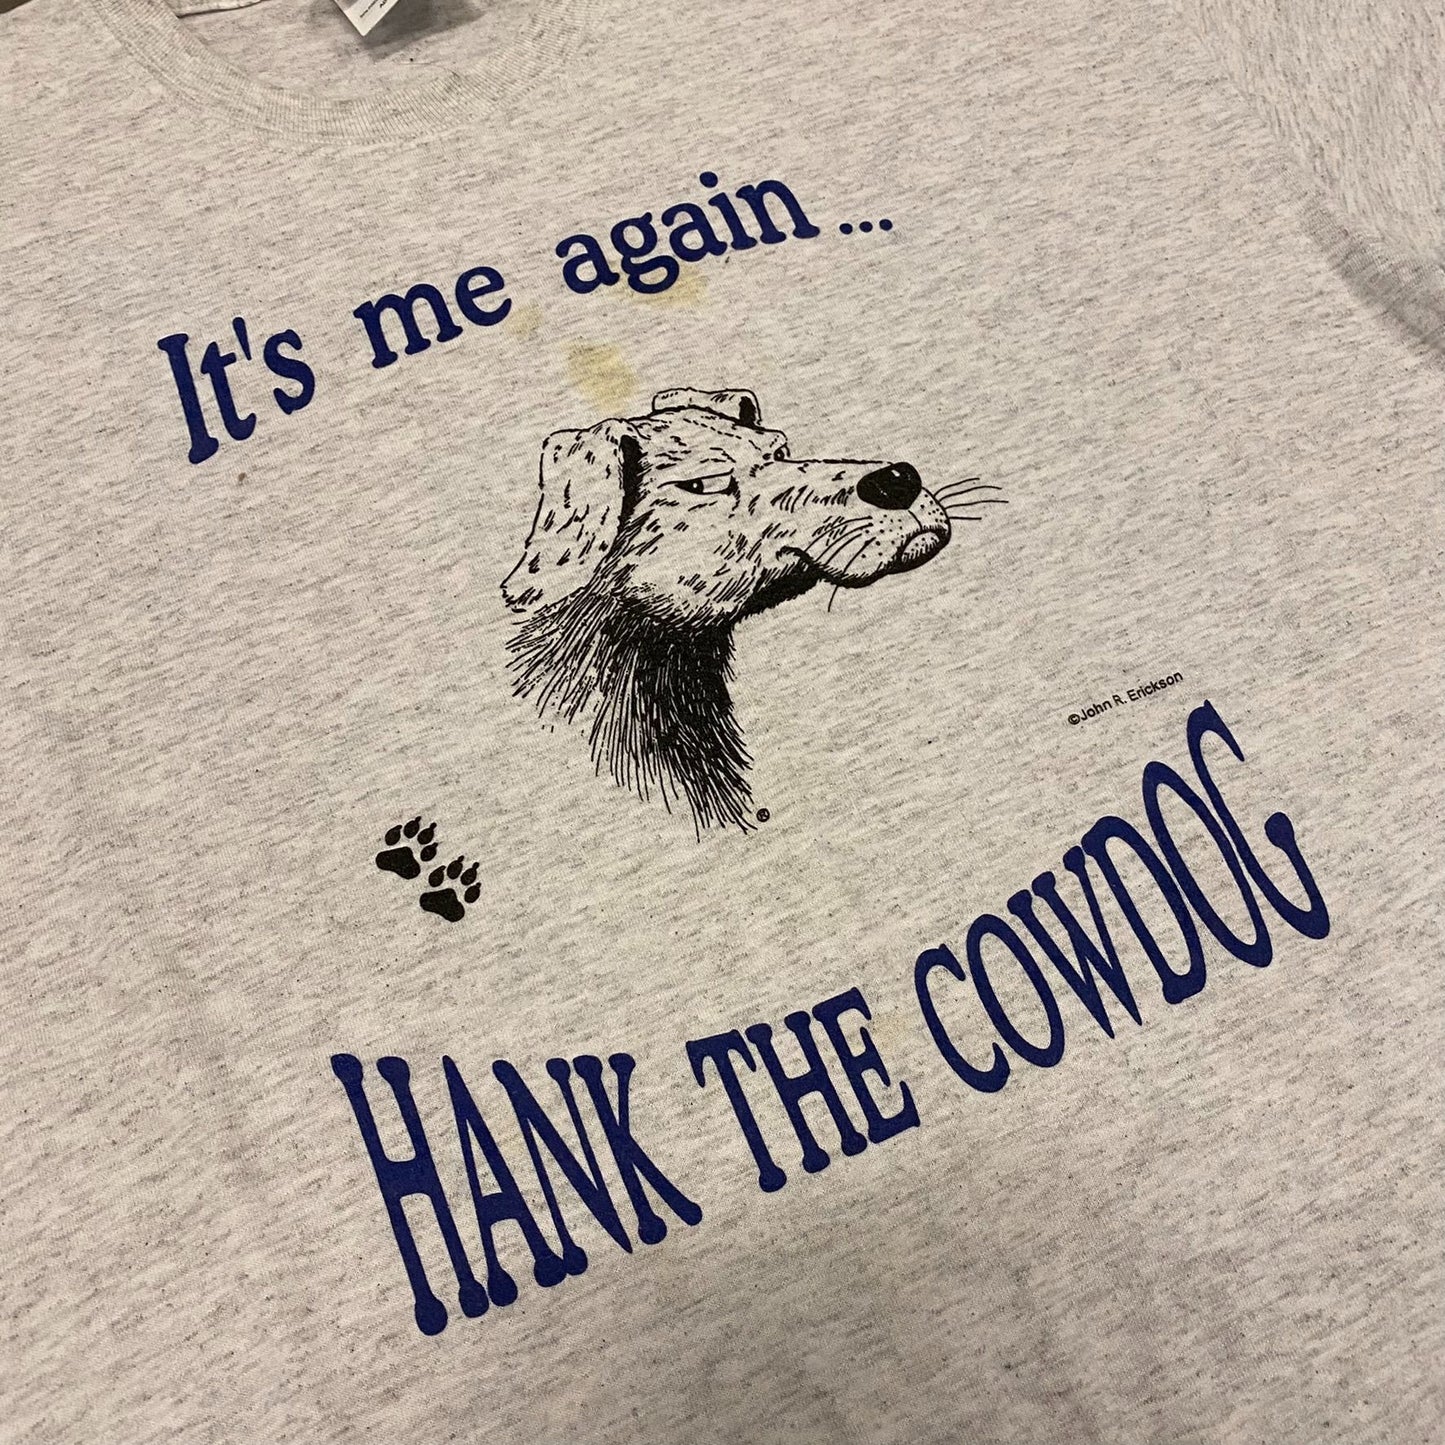 Hank the Cowdog Vintage 90s T-Shirt